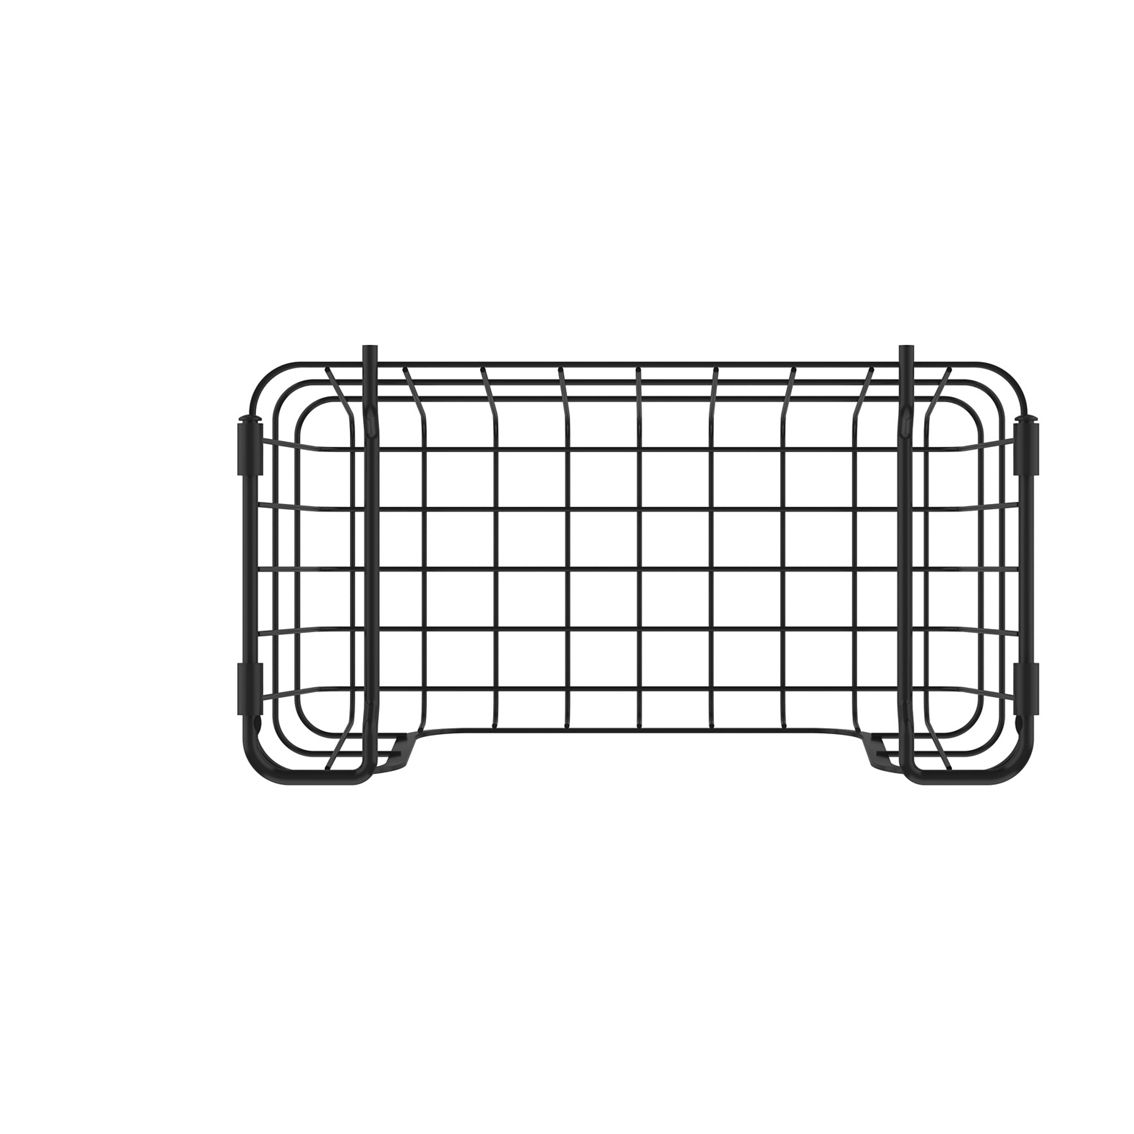 Oceanstar Stackable Metal Wire Storage Basket Set for Pantry – Black, Set of 3 - Image 5 of 5